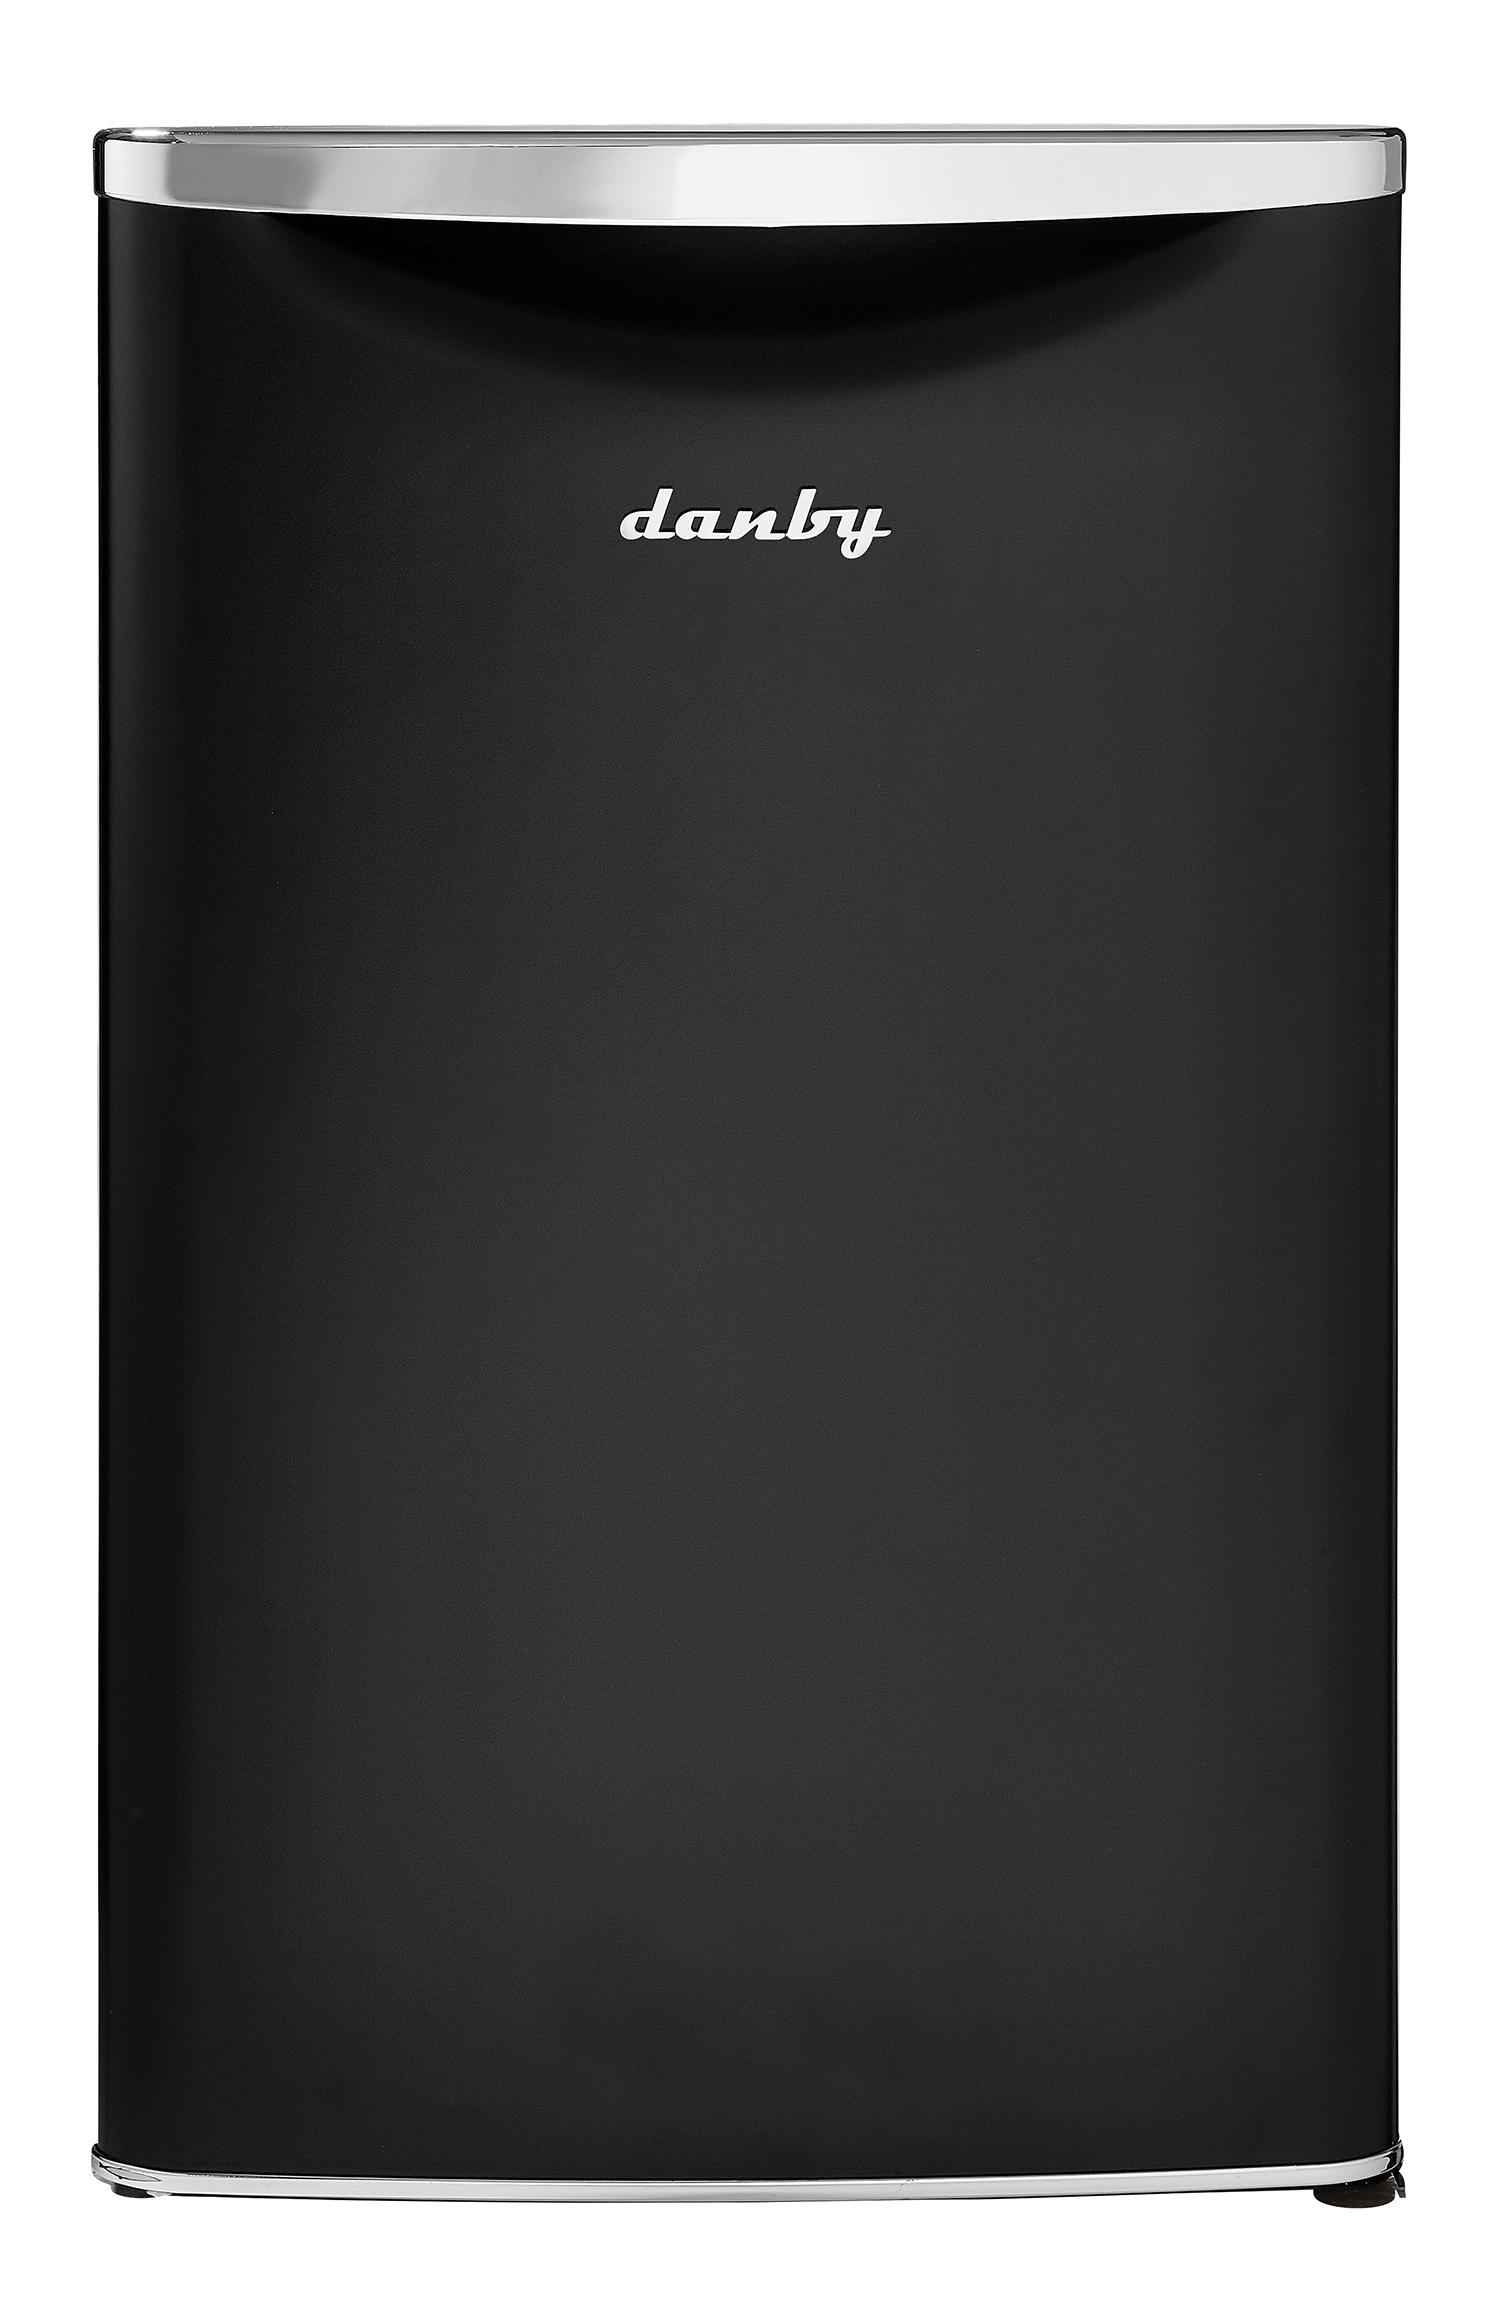 Danby 4.7 cu. ft. 2-door Compact Fridge in Black Stainless Steel -  DCR047A1BBSL